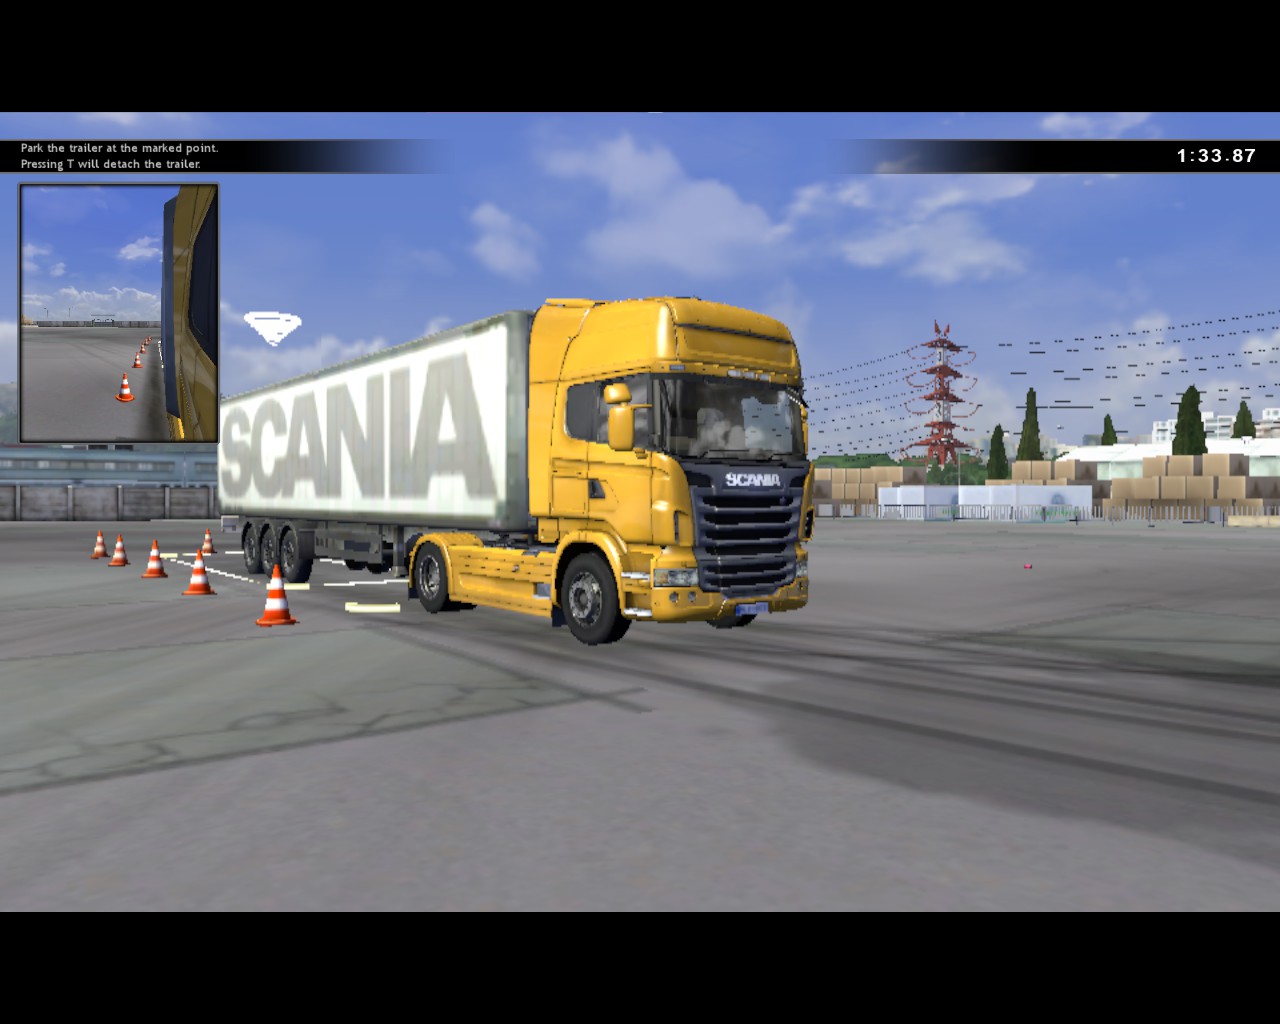 download free scania truck simulator